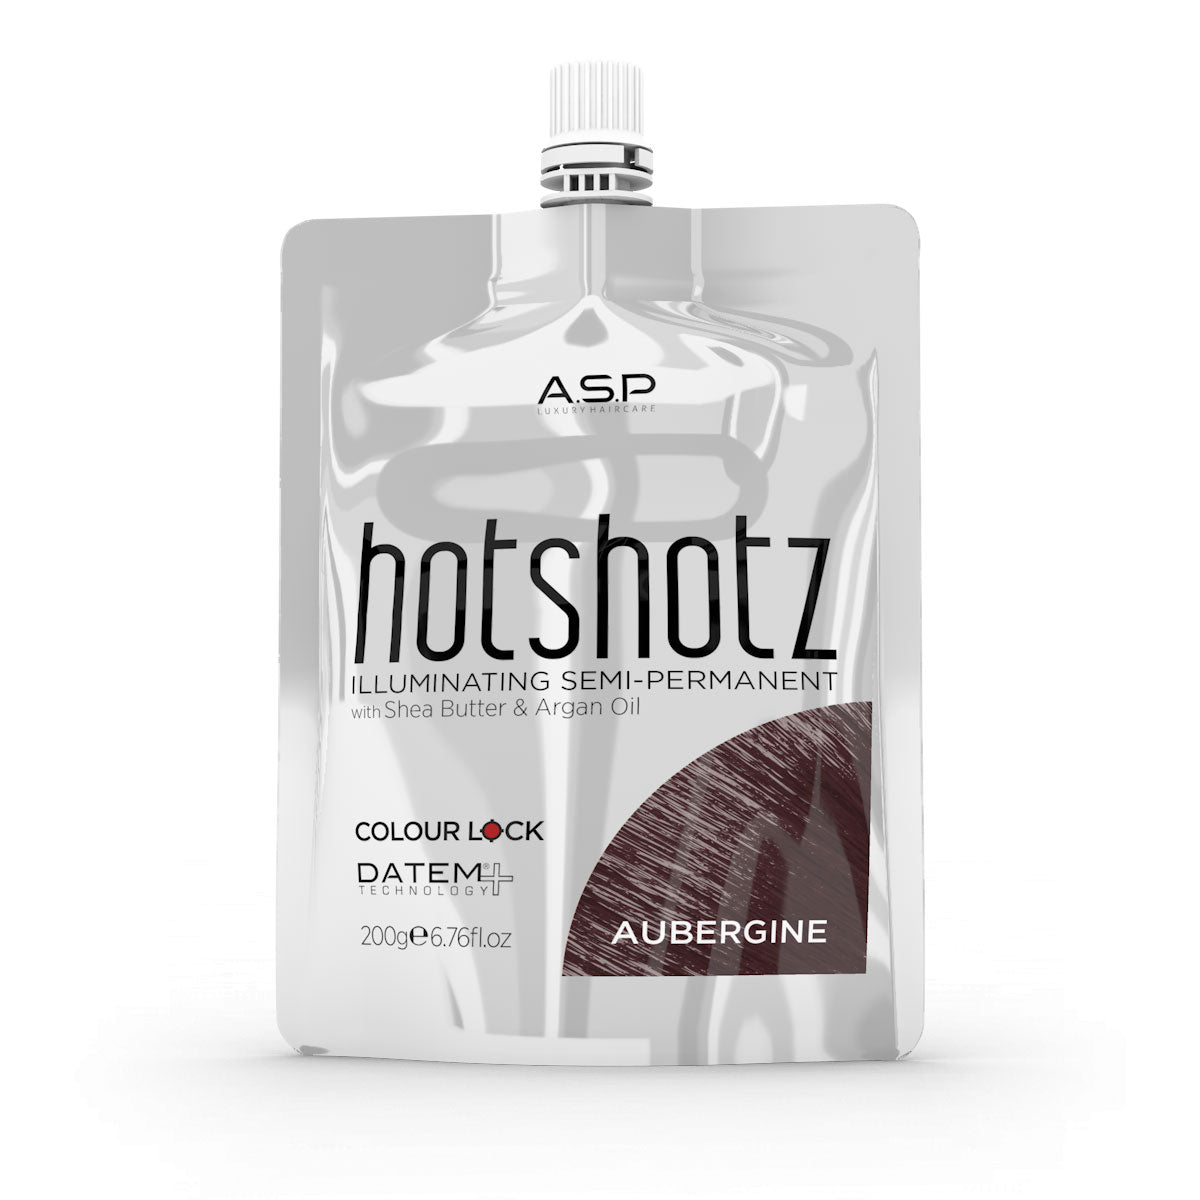 Affinage Hotshotz Semi Permanent Hair Dye - 200ml - Aubergine